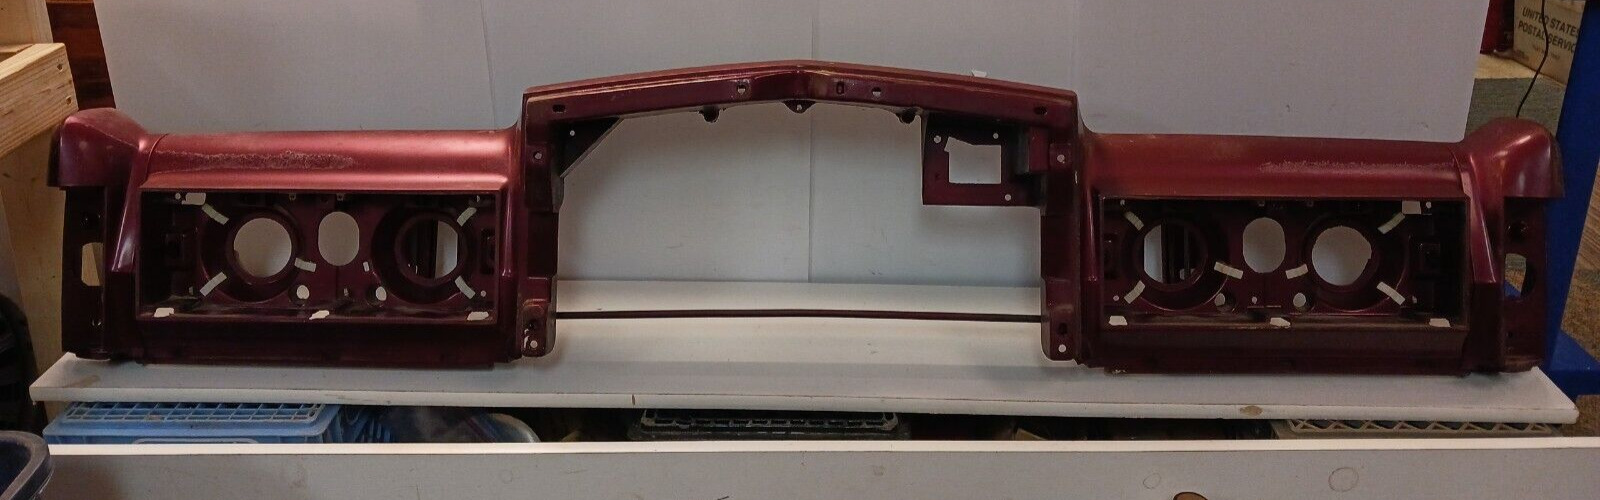 Used OEM Grille Header Panel 1985-1989 Lincoln Town Car Maroon (LI 27)